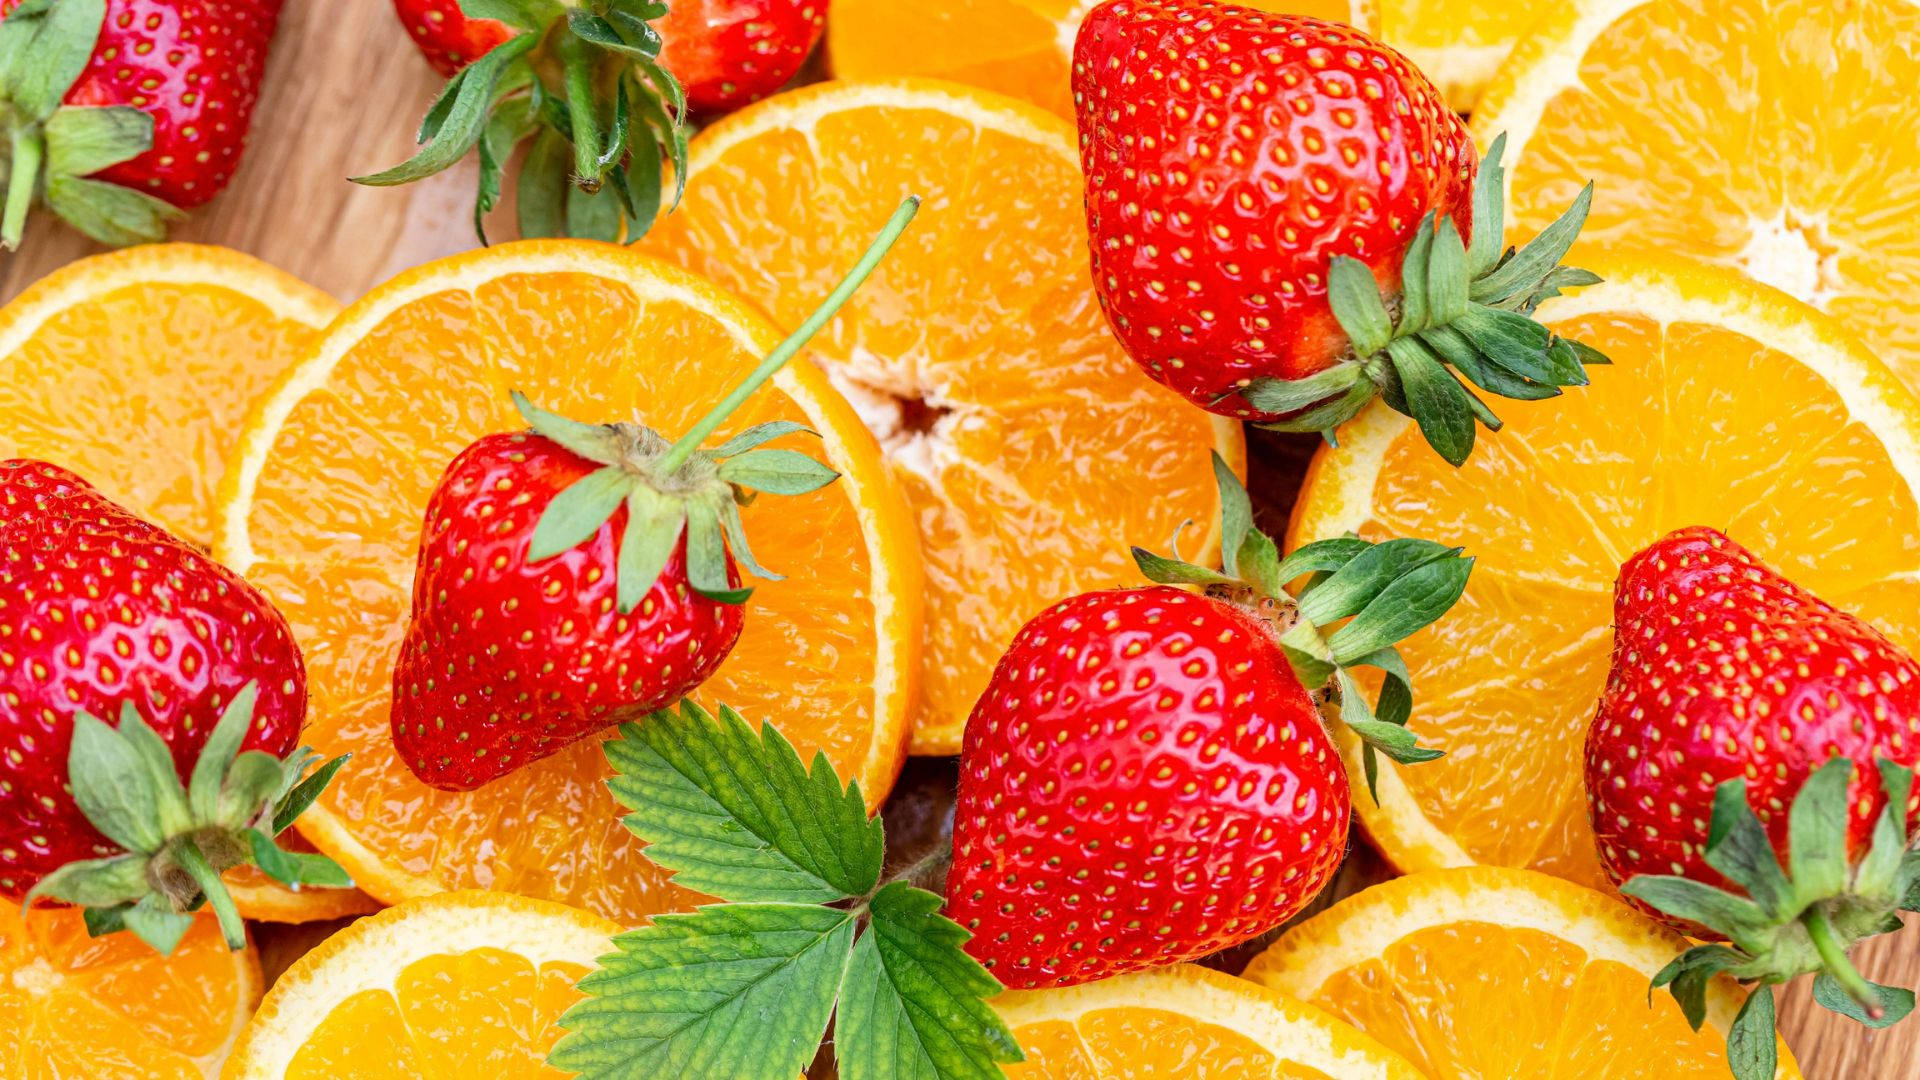 Caption: Fresh Orange Fruits With Ripe Red Strawberries Background